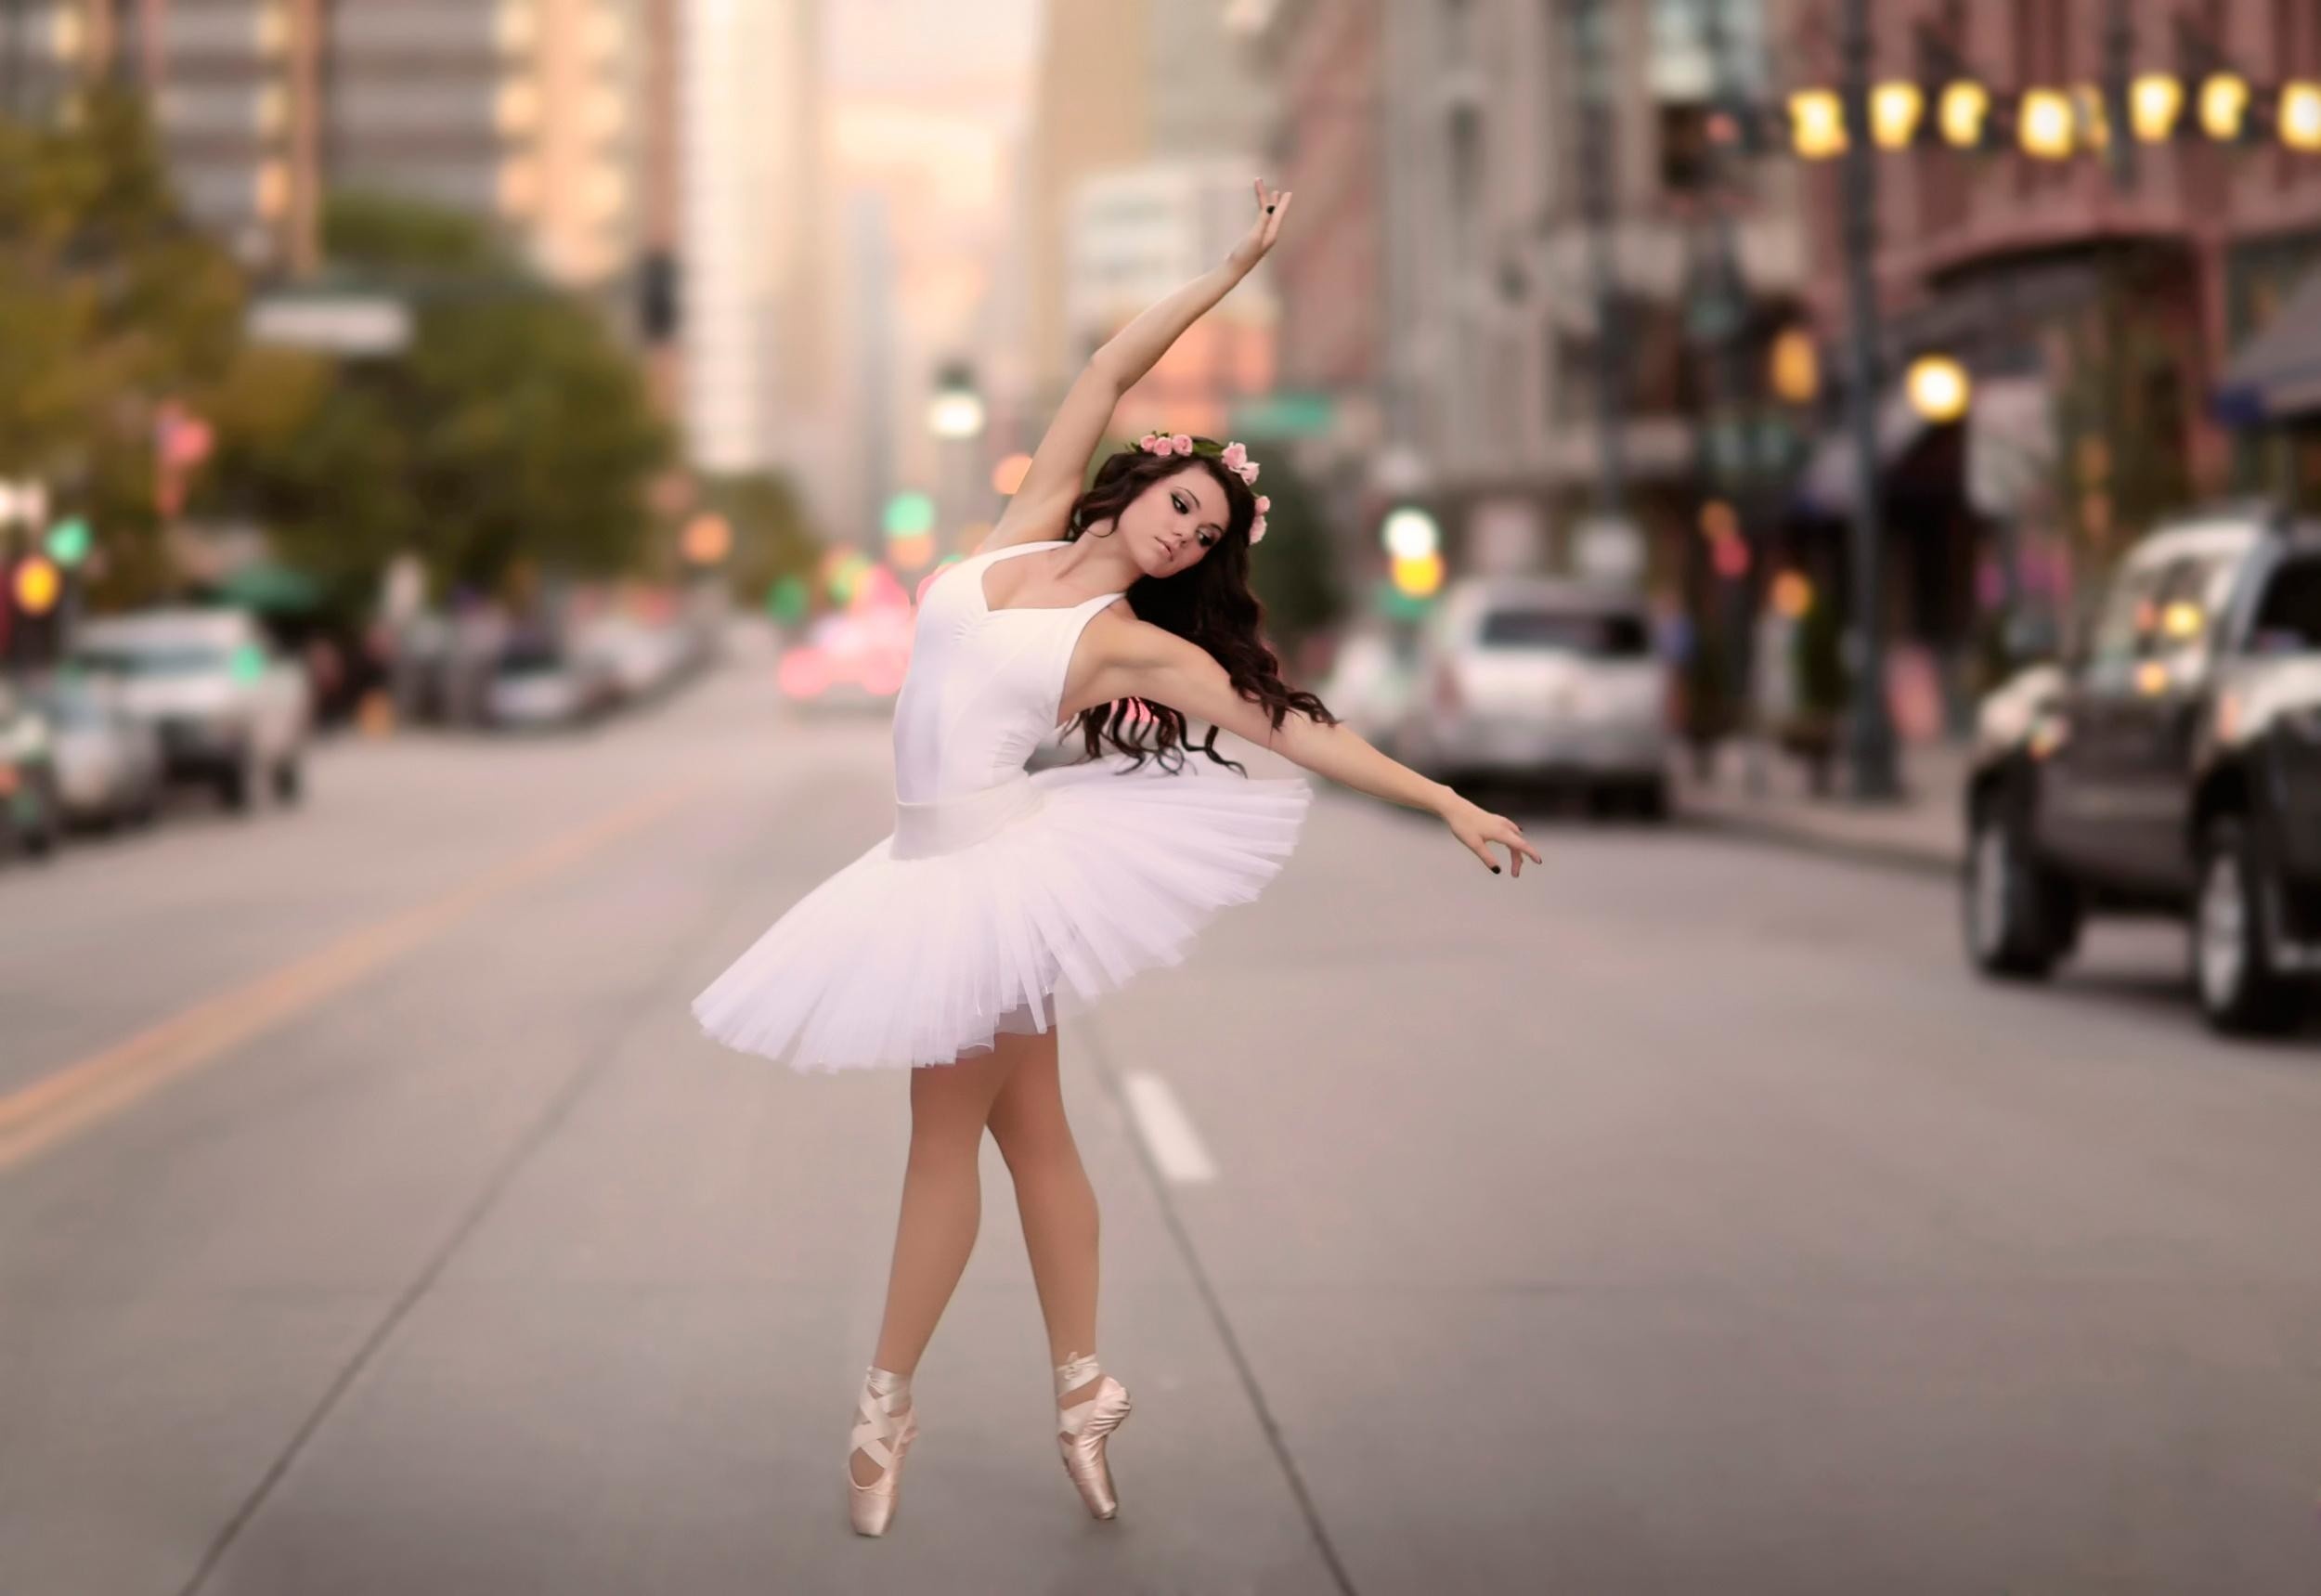 Ballerina wallpapers, Artistic beauty, Dance inspiration, Graceful poses, 2500x1720 HD Desktop